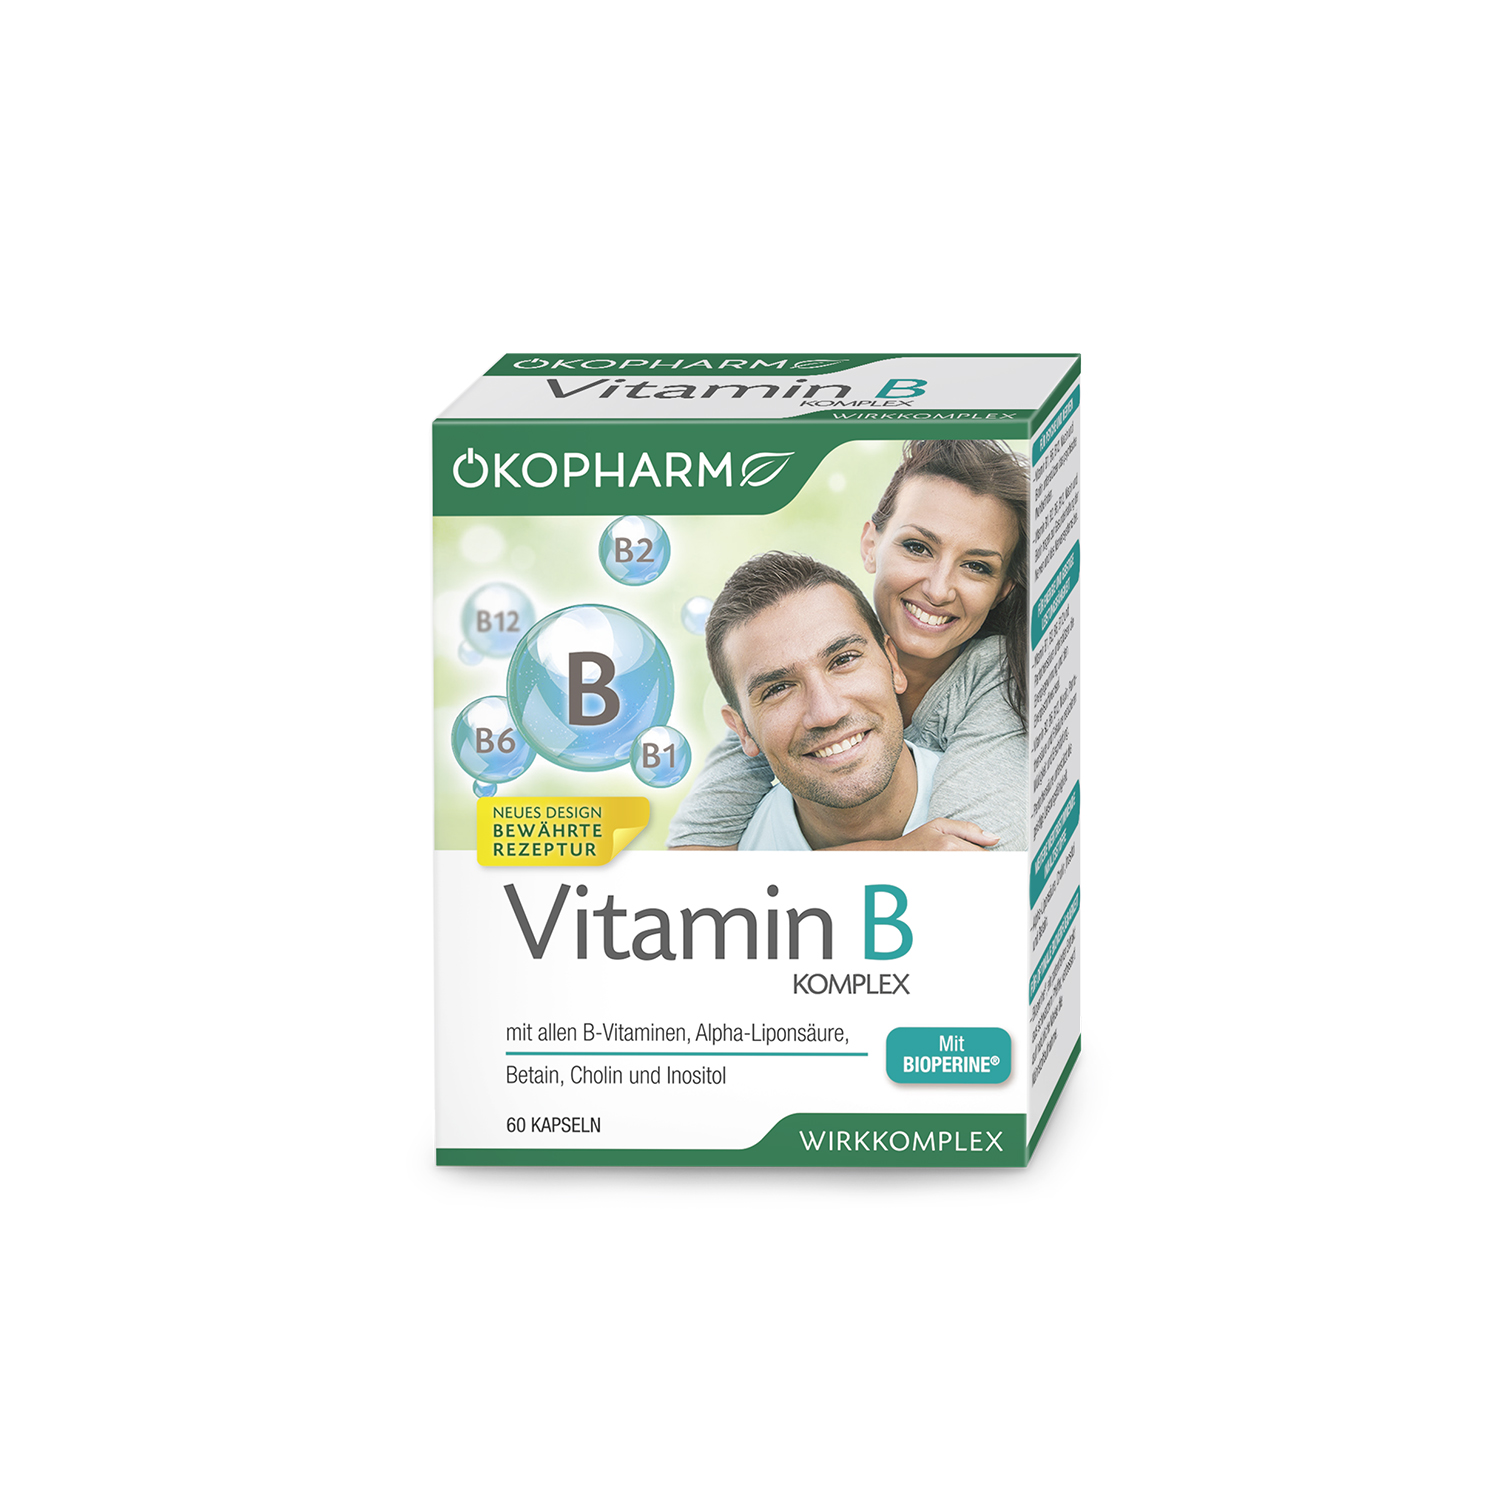 Ökopharm Vitamin B Complex